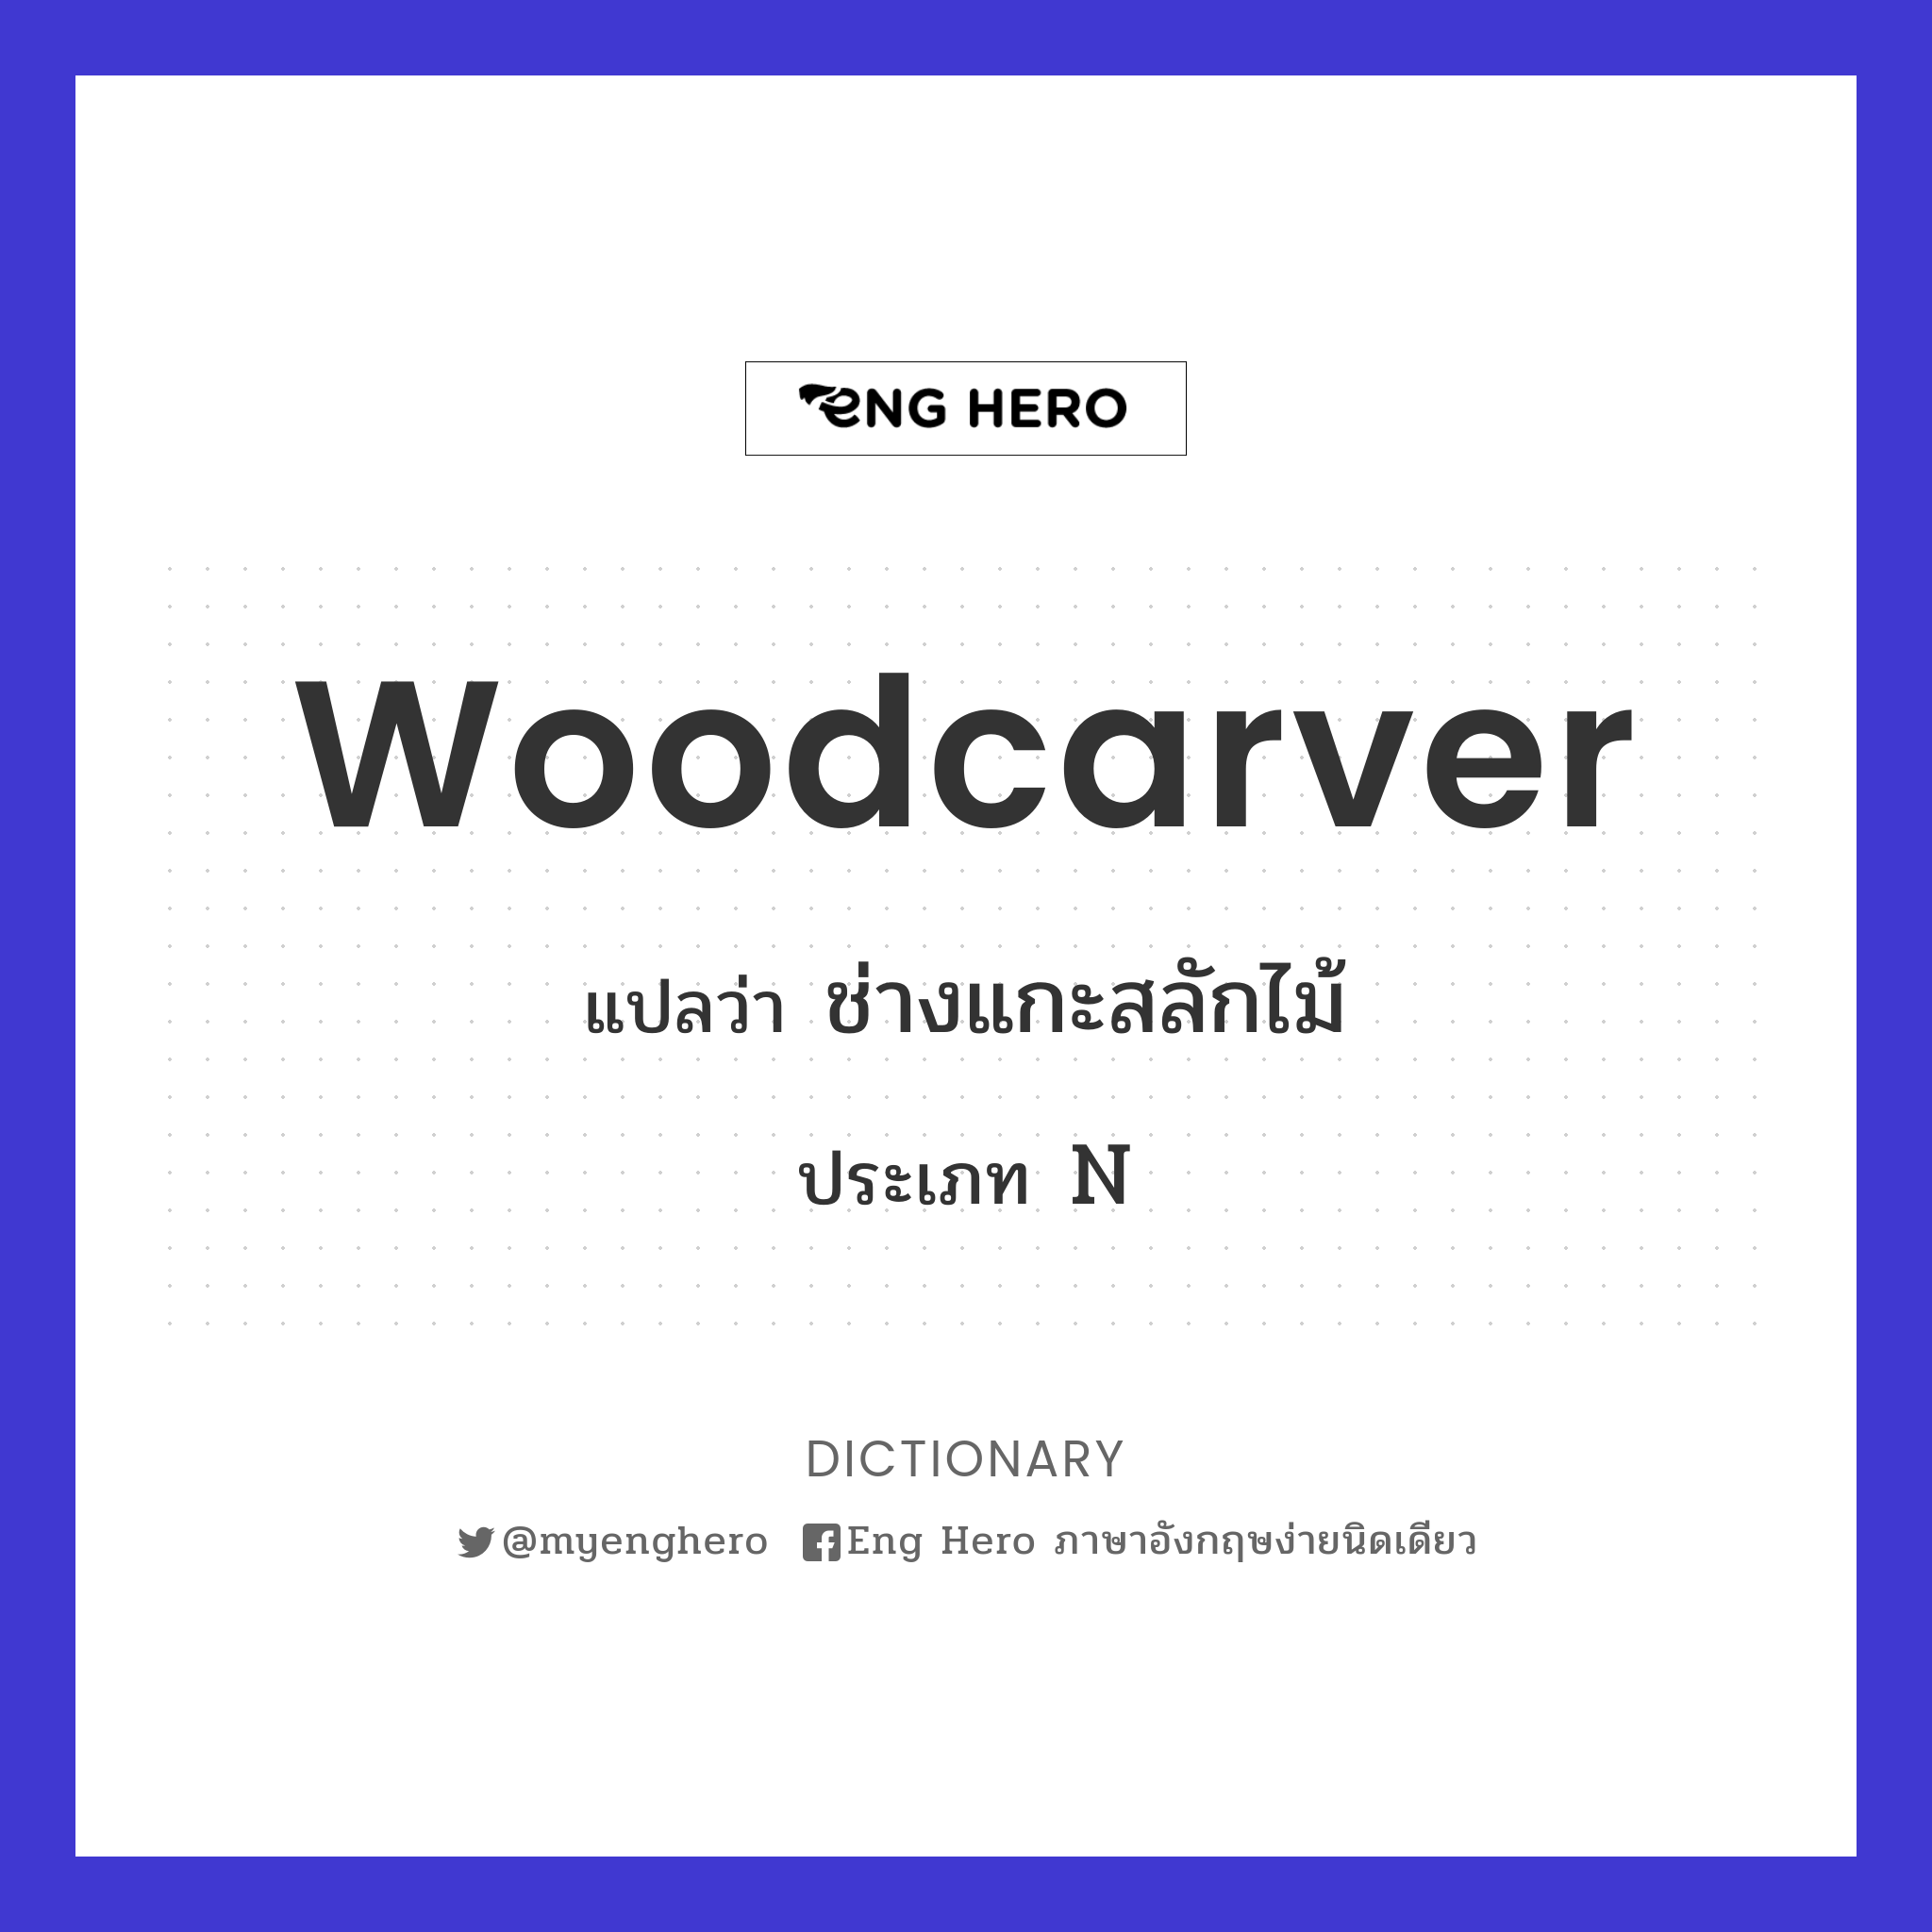 woodcarver